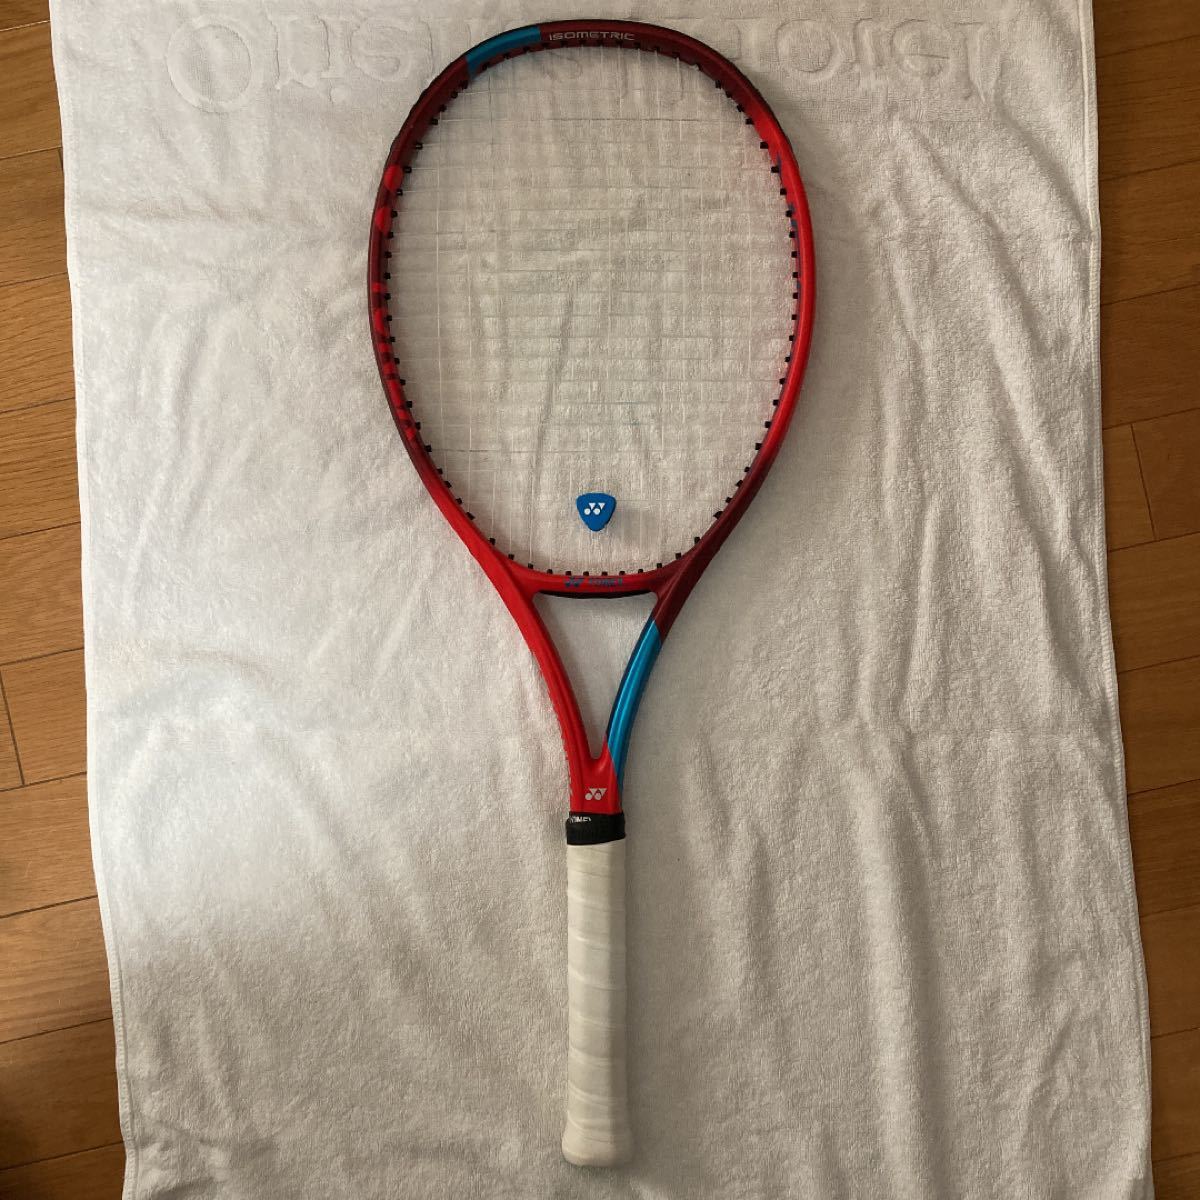 YONEX Vコア 100L VCORE G1 ガット張り替えサービス付 硬式テニス